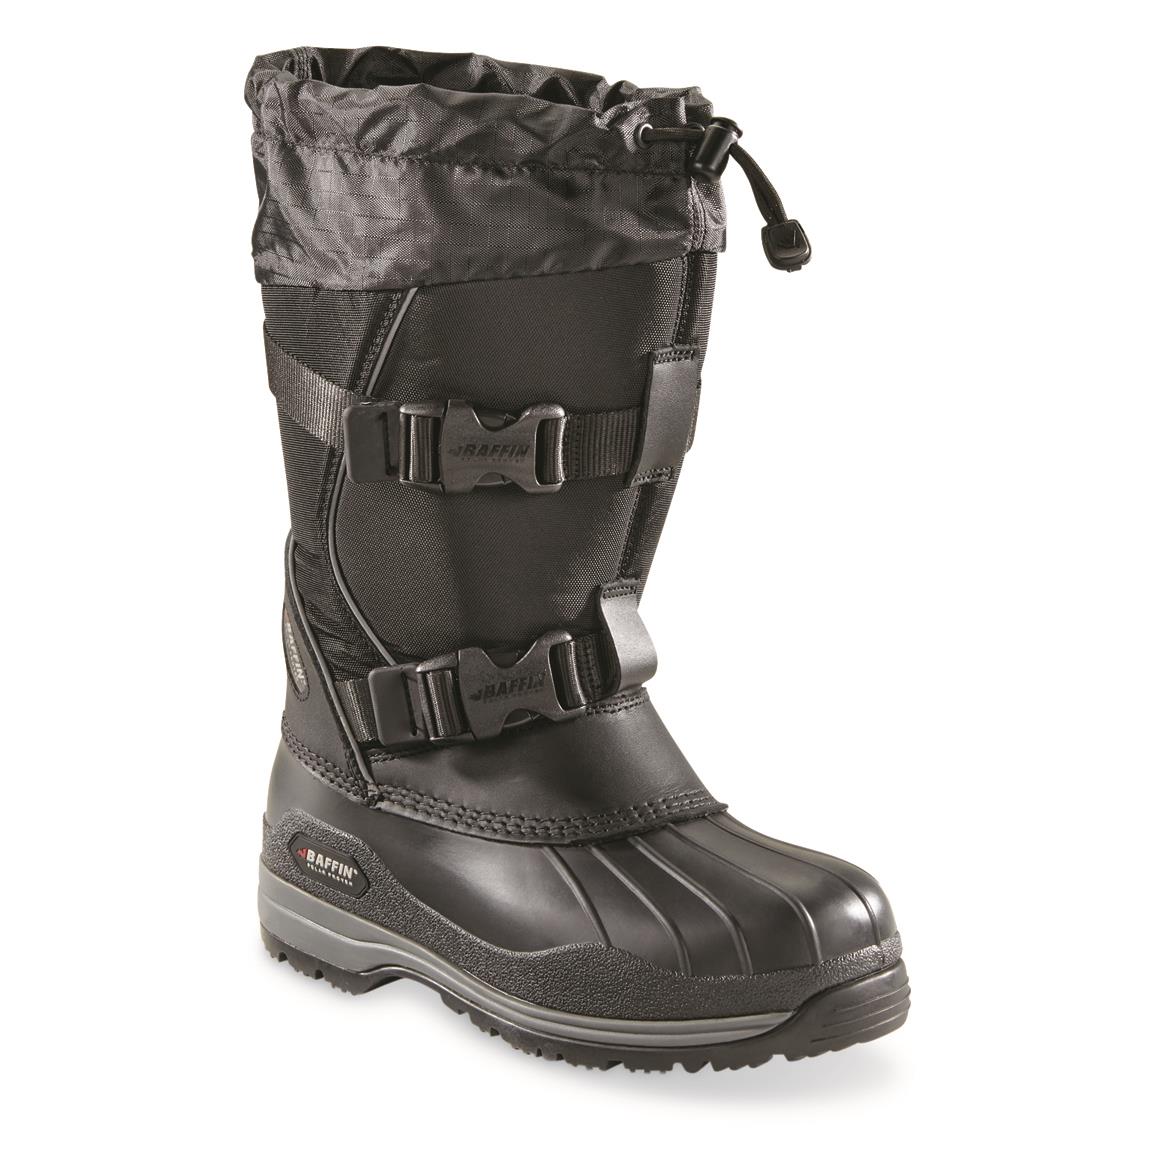 Baffin Women's Impact Polar Insulated Waterproof Boots, Black